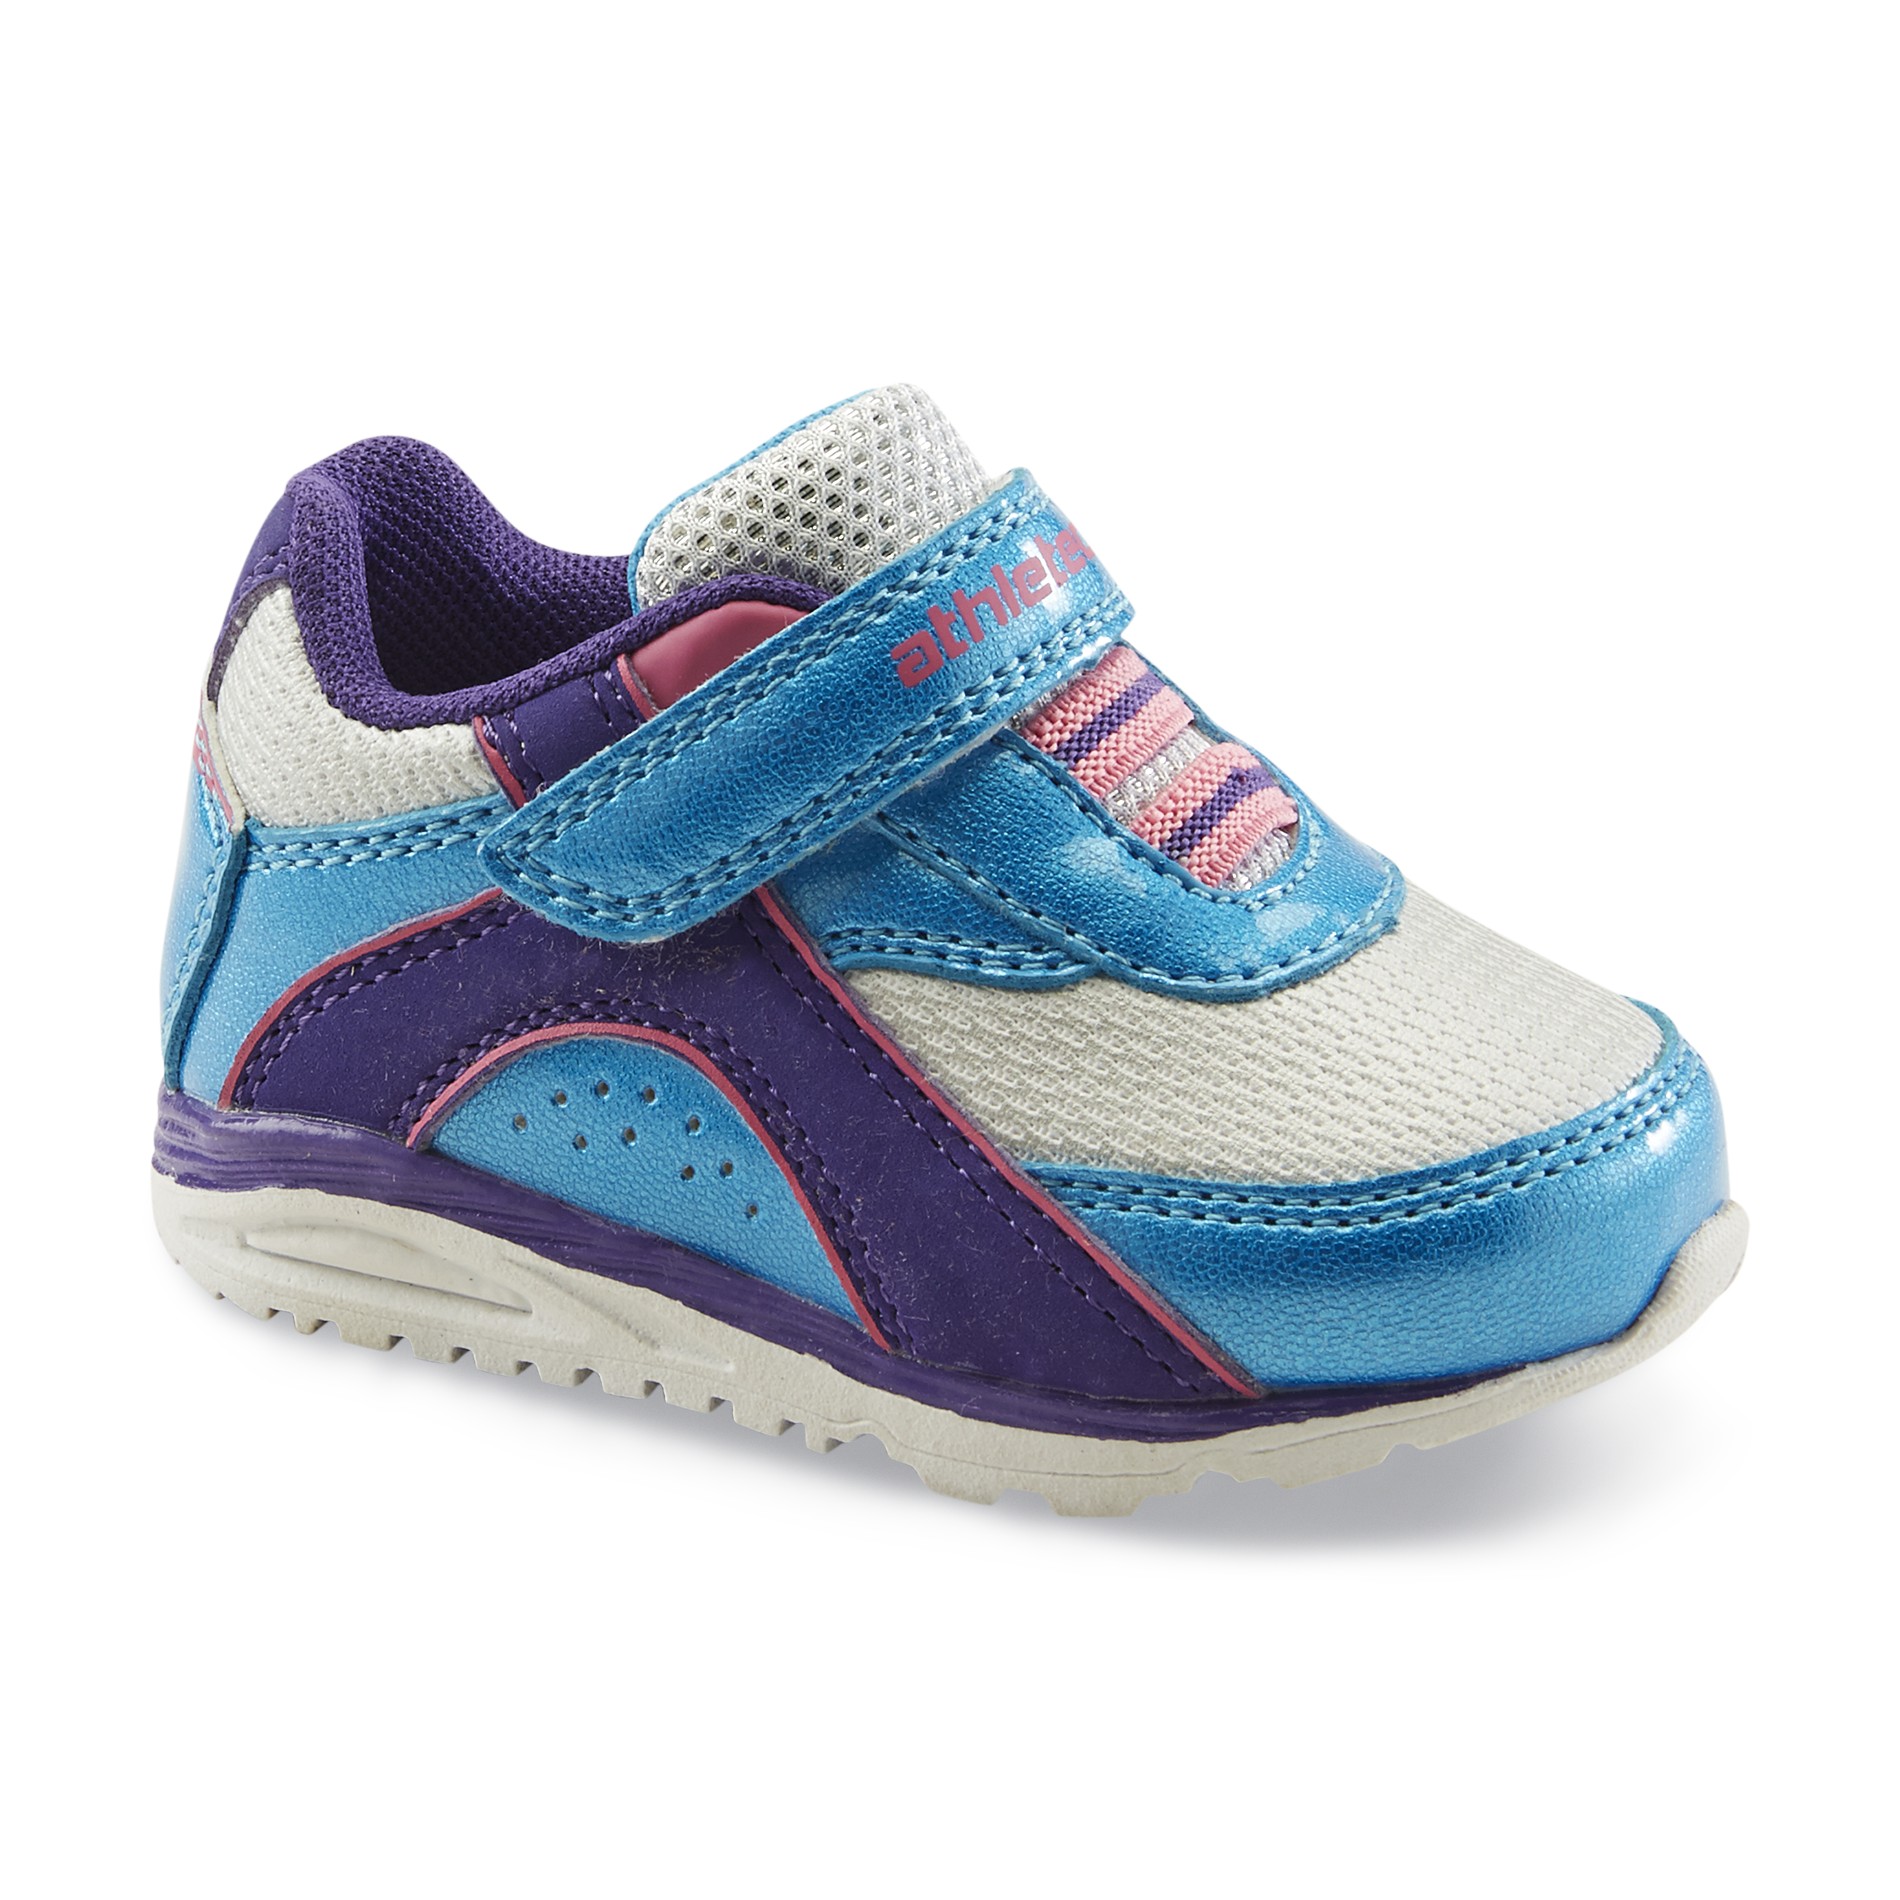 Athletech Toddler Girl's Berke Athletic Sneaker - Blue/Purple/Pink